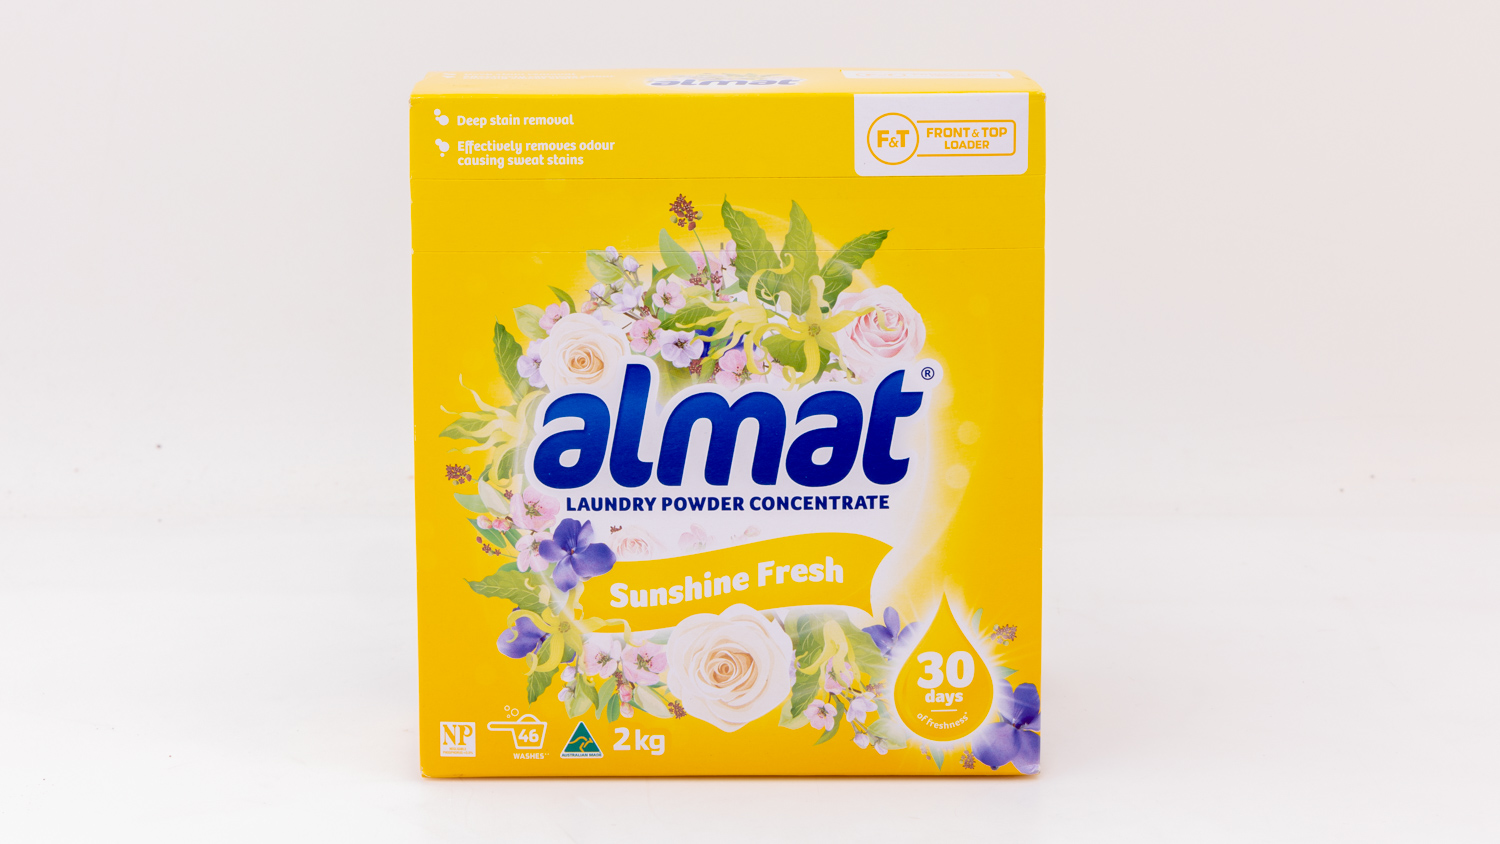 Aldi Almat Laundry Powder Concentrate Sunshine Fresh Front Loader carousel image